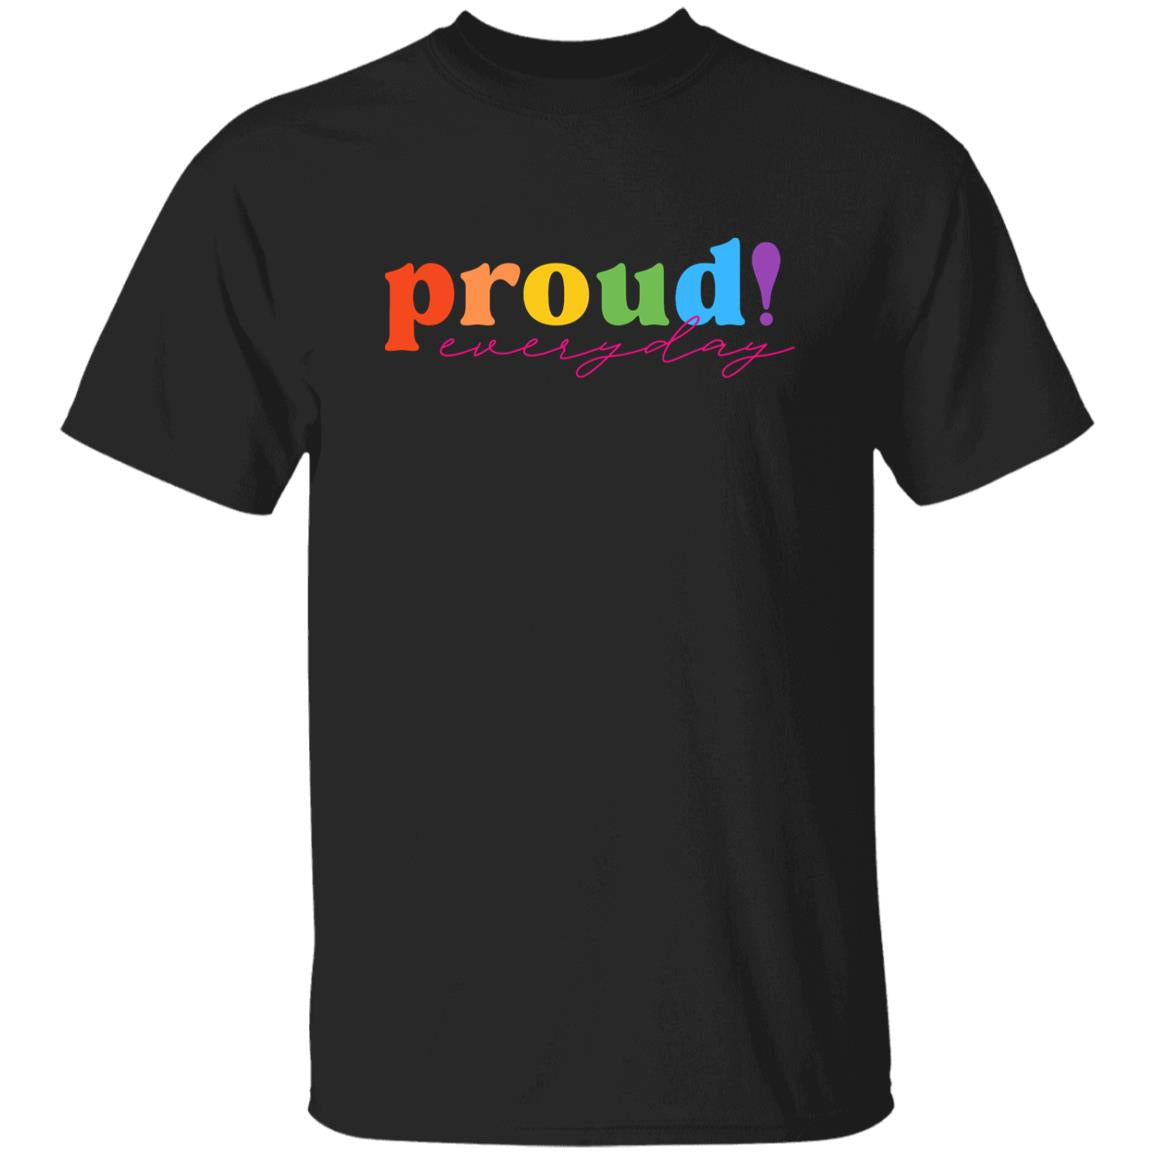 Proud Everyday (pride t-shirt)